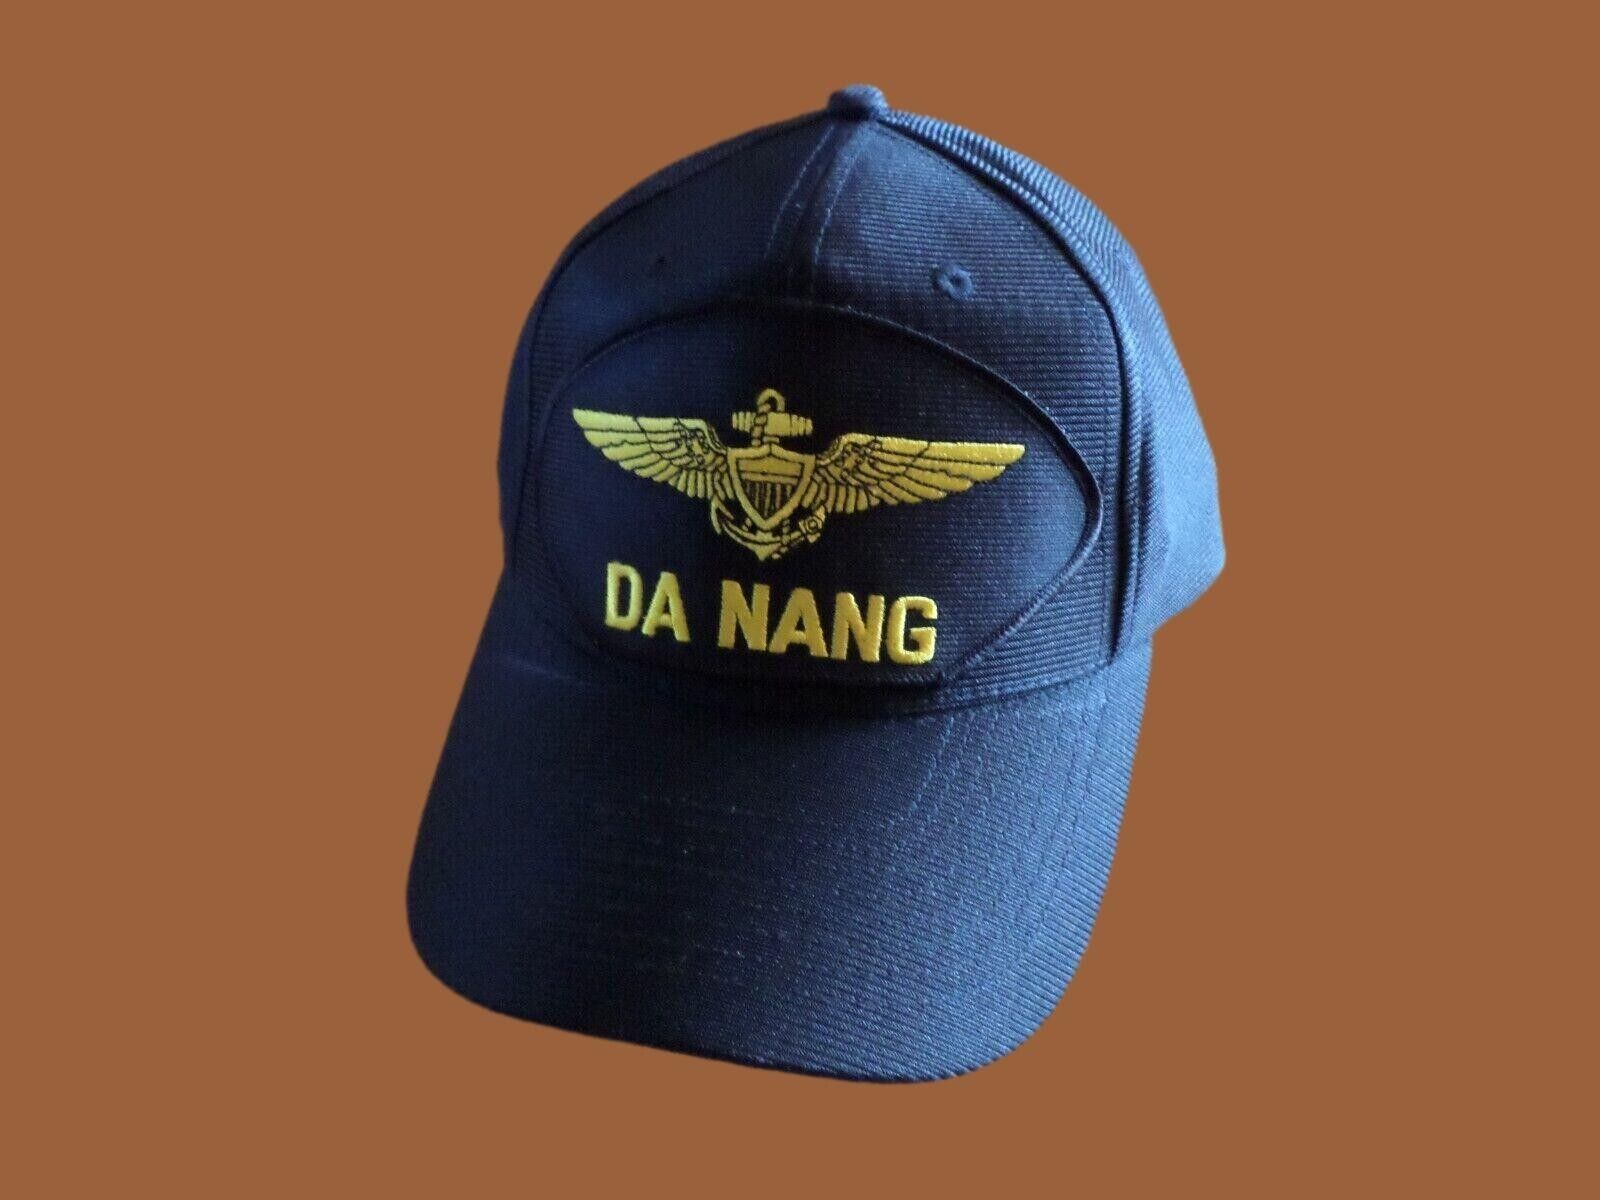 DA NANG HAT WITH GOLD NAVY PILOT WINGS U.S MILITARY OFFICIAL BALL CAP U.S.A MADE